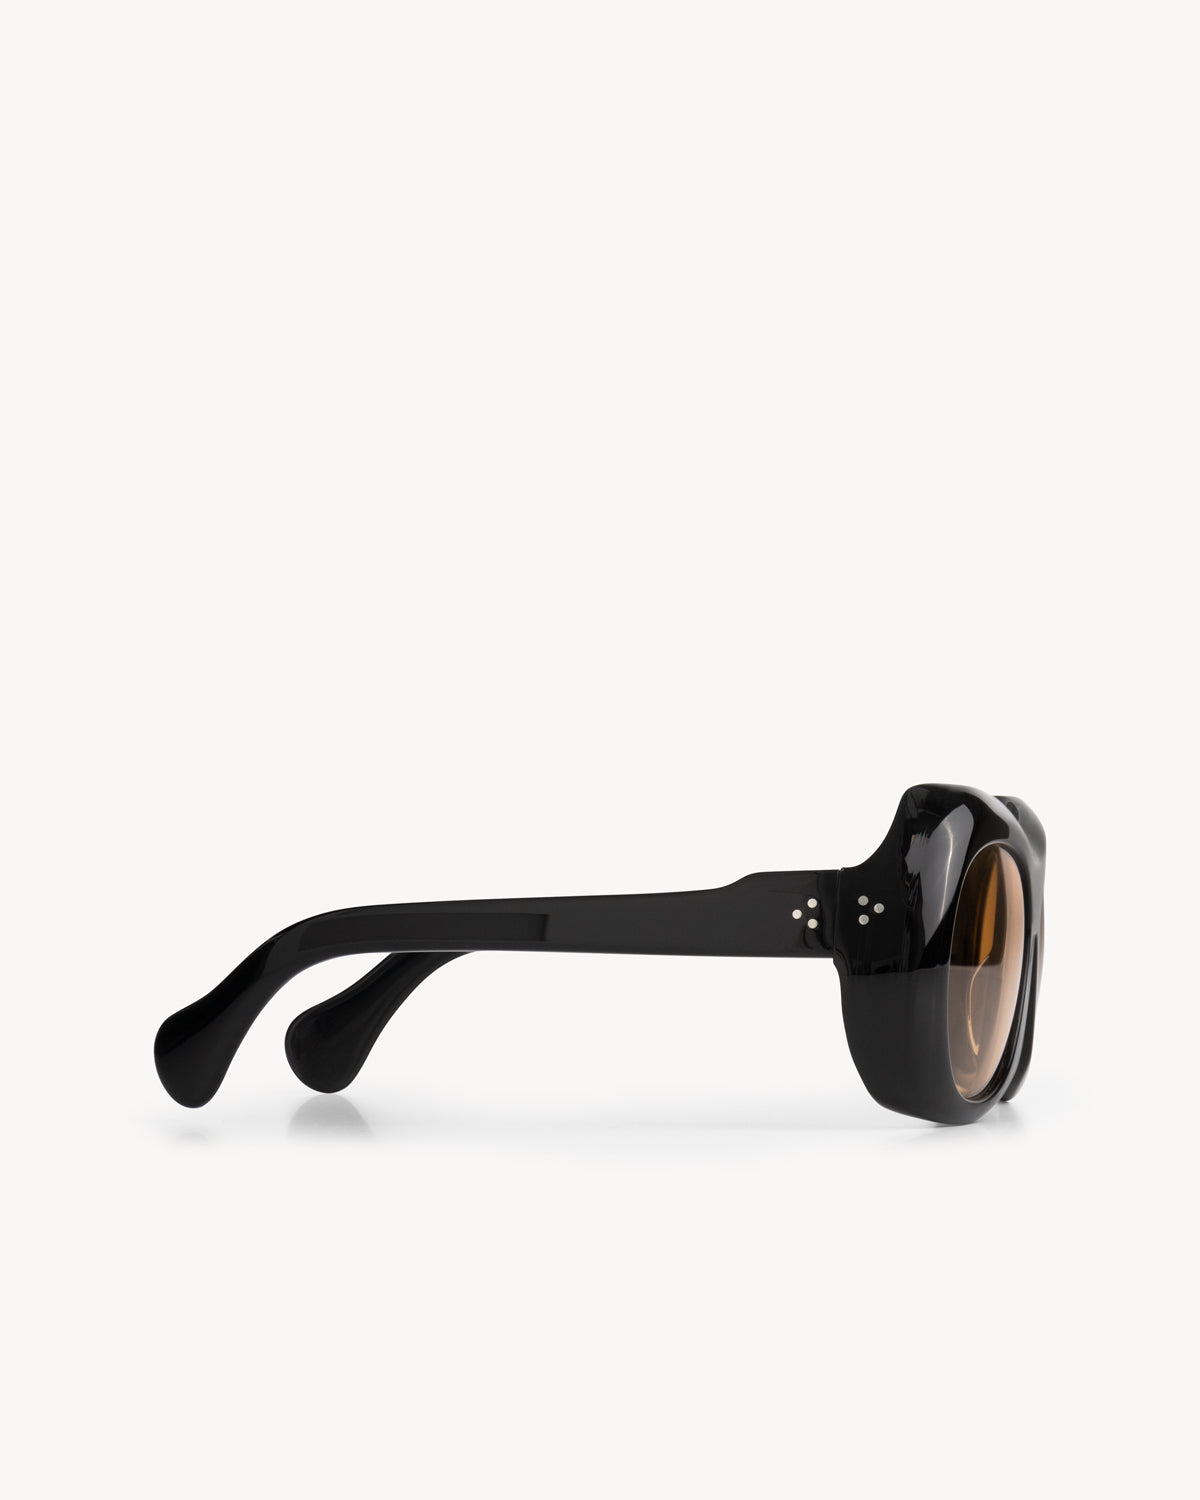 Port Tanger Soledad Sunglasses in Black Acetate and Amber Lenses 4